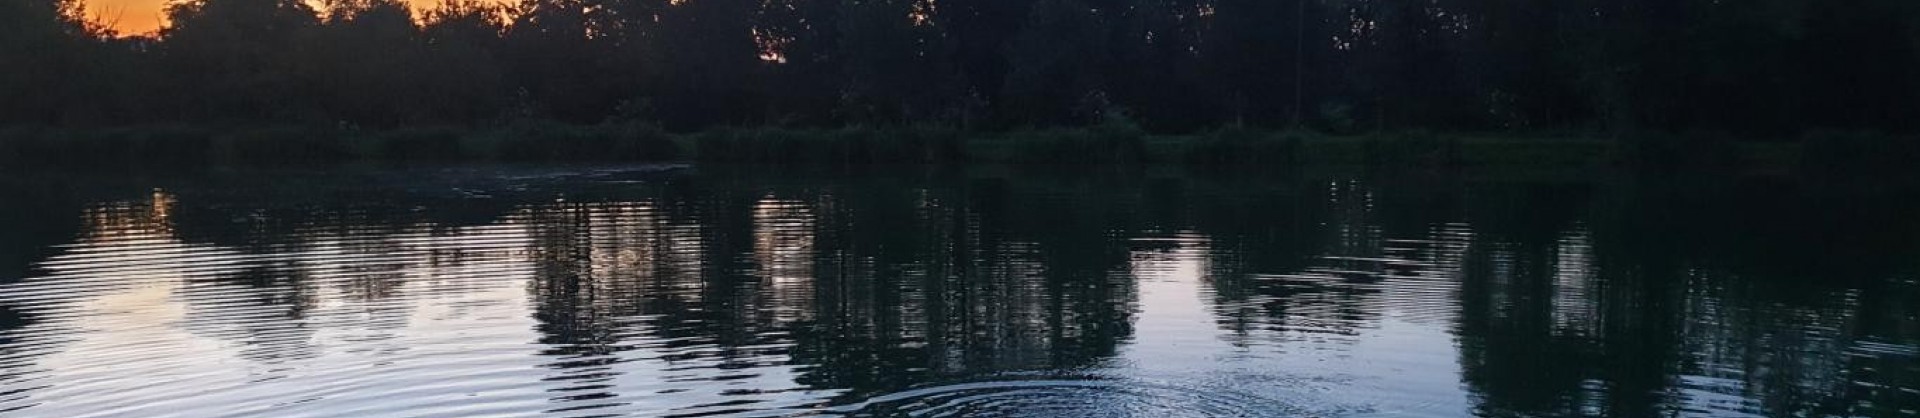 Maribor miklav ribniki moja jezera manca korelc 3 sl